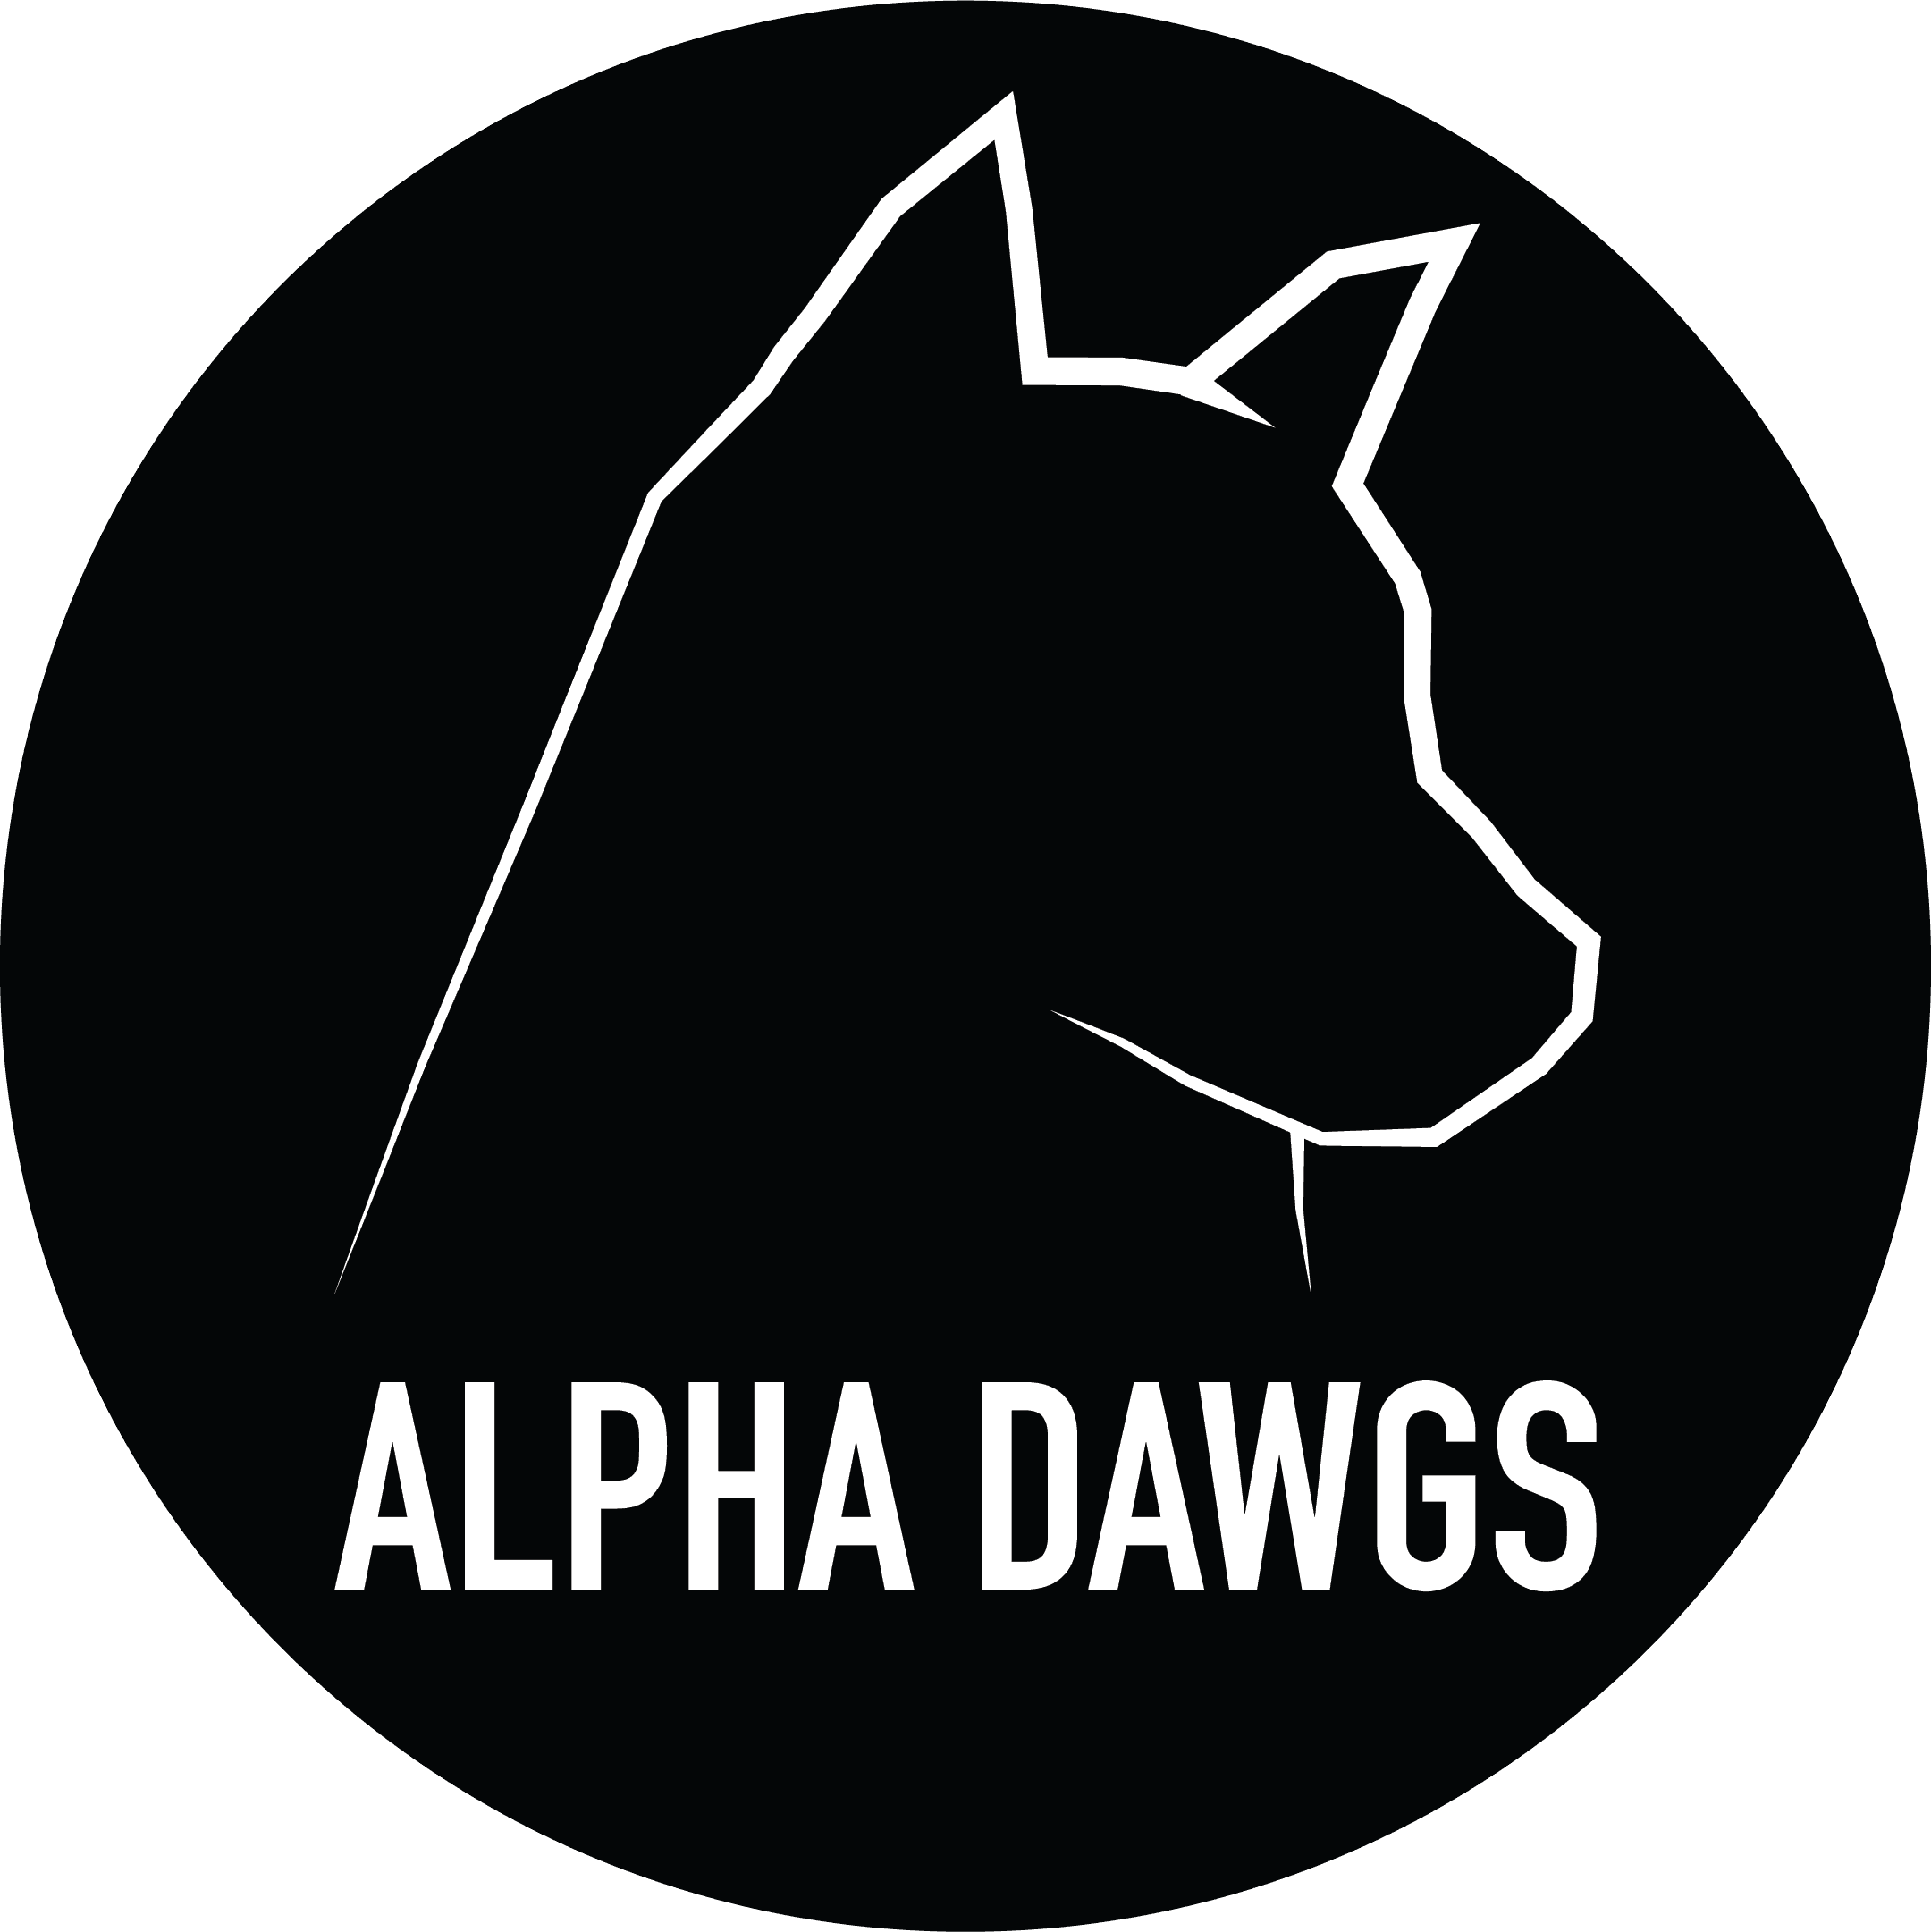 AlphaDawgs